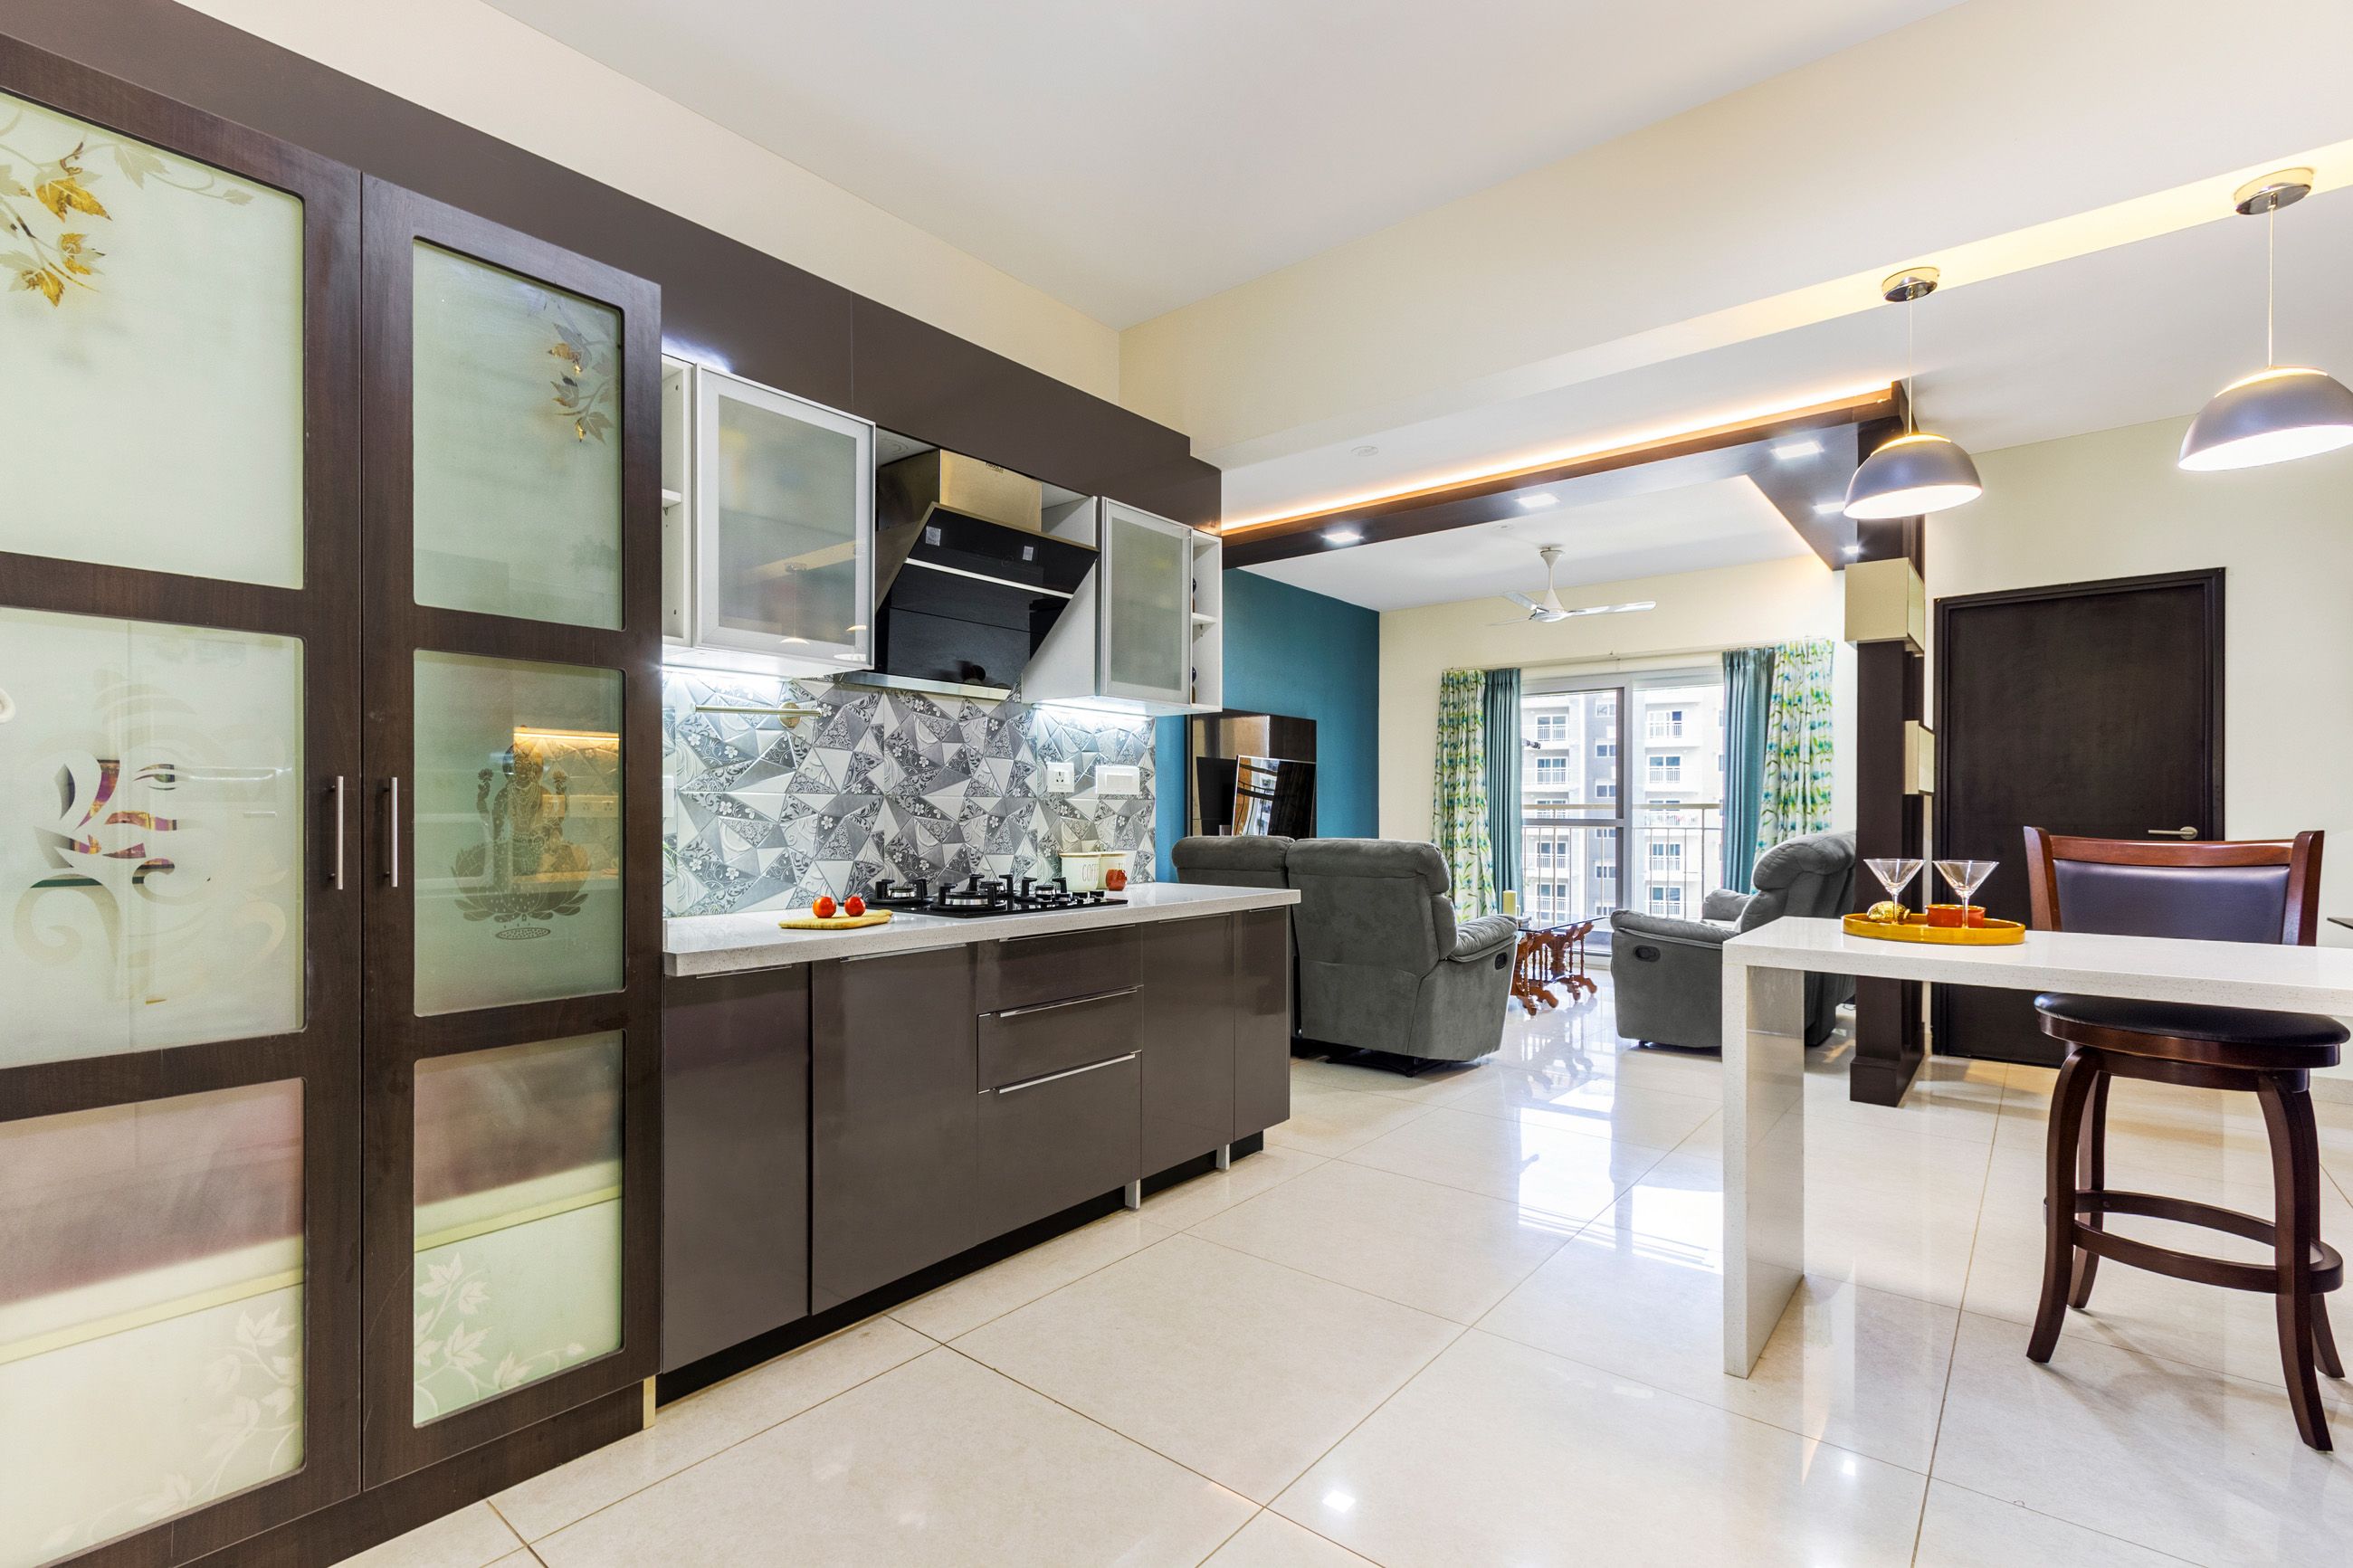 Modern Gothic Grey India Kitchen Cabinet Design With Abstract Geometric Backsplash